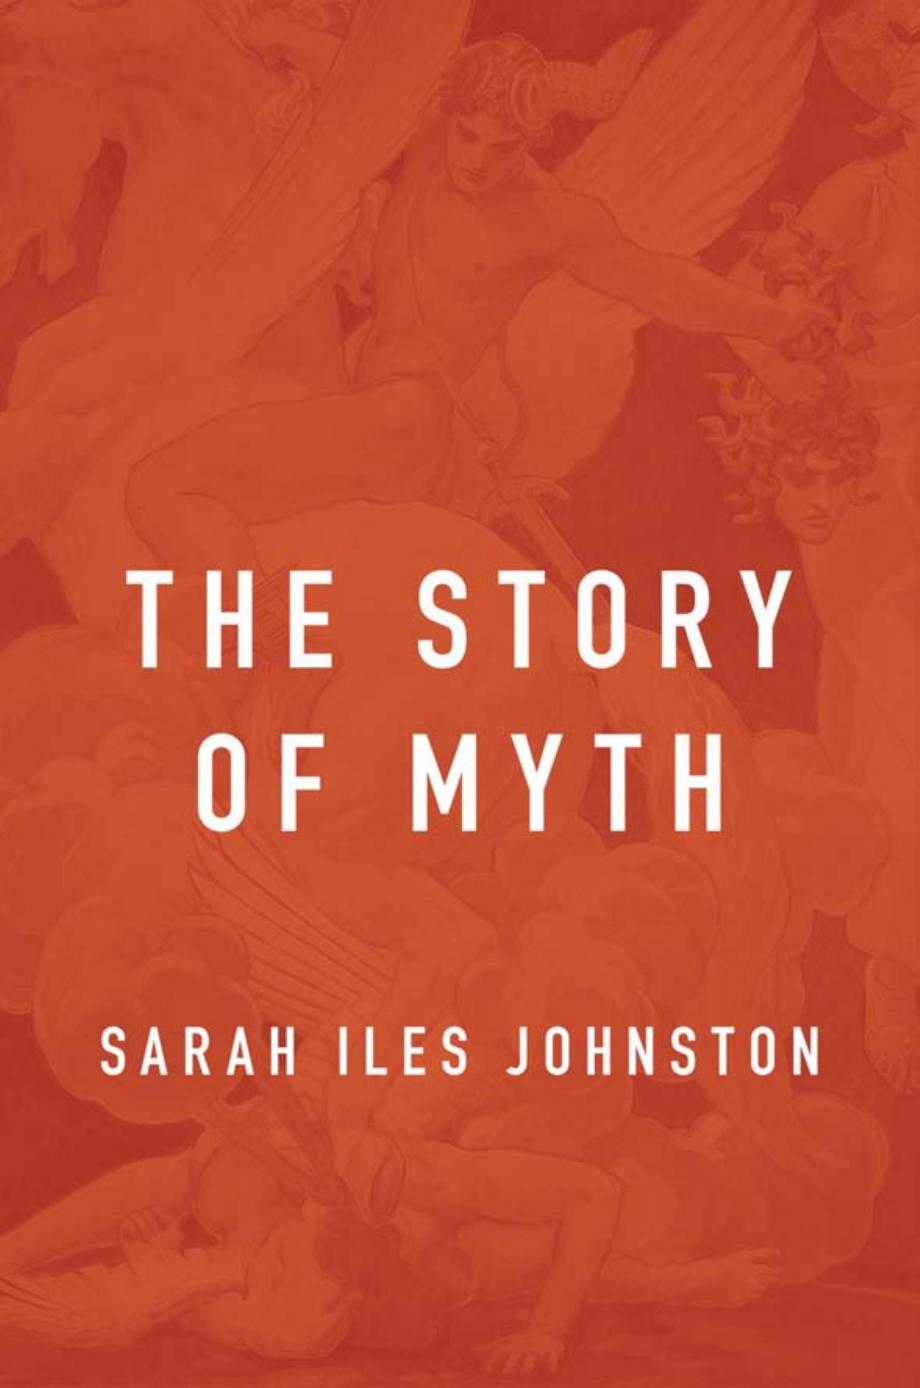 The Story of Myth by Sarah Iles Johnston